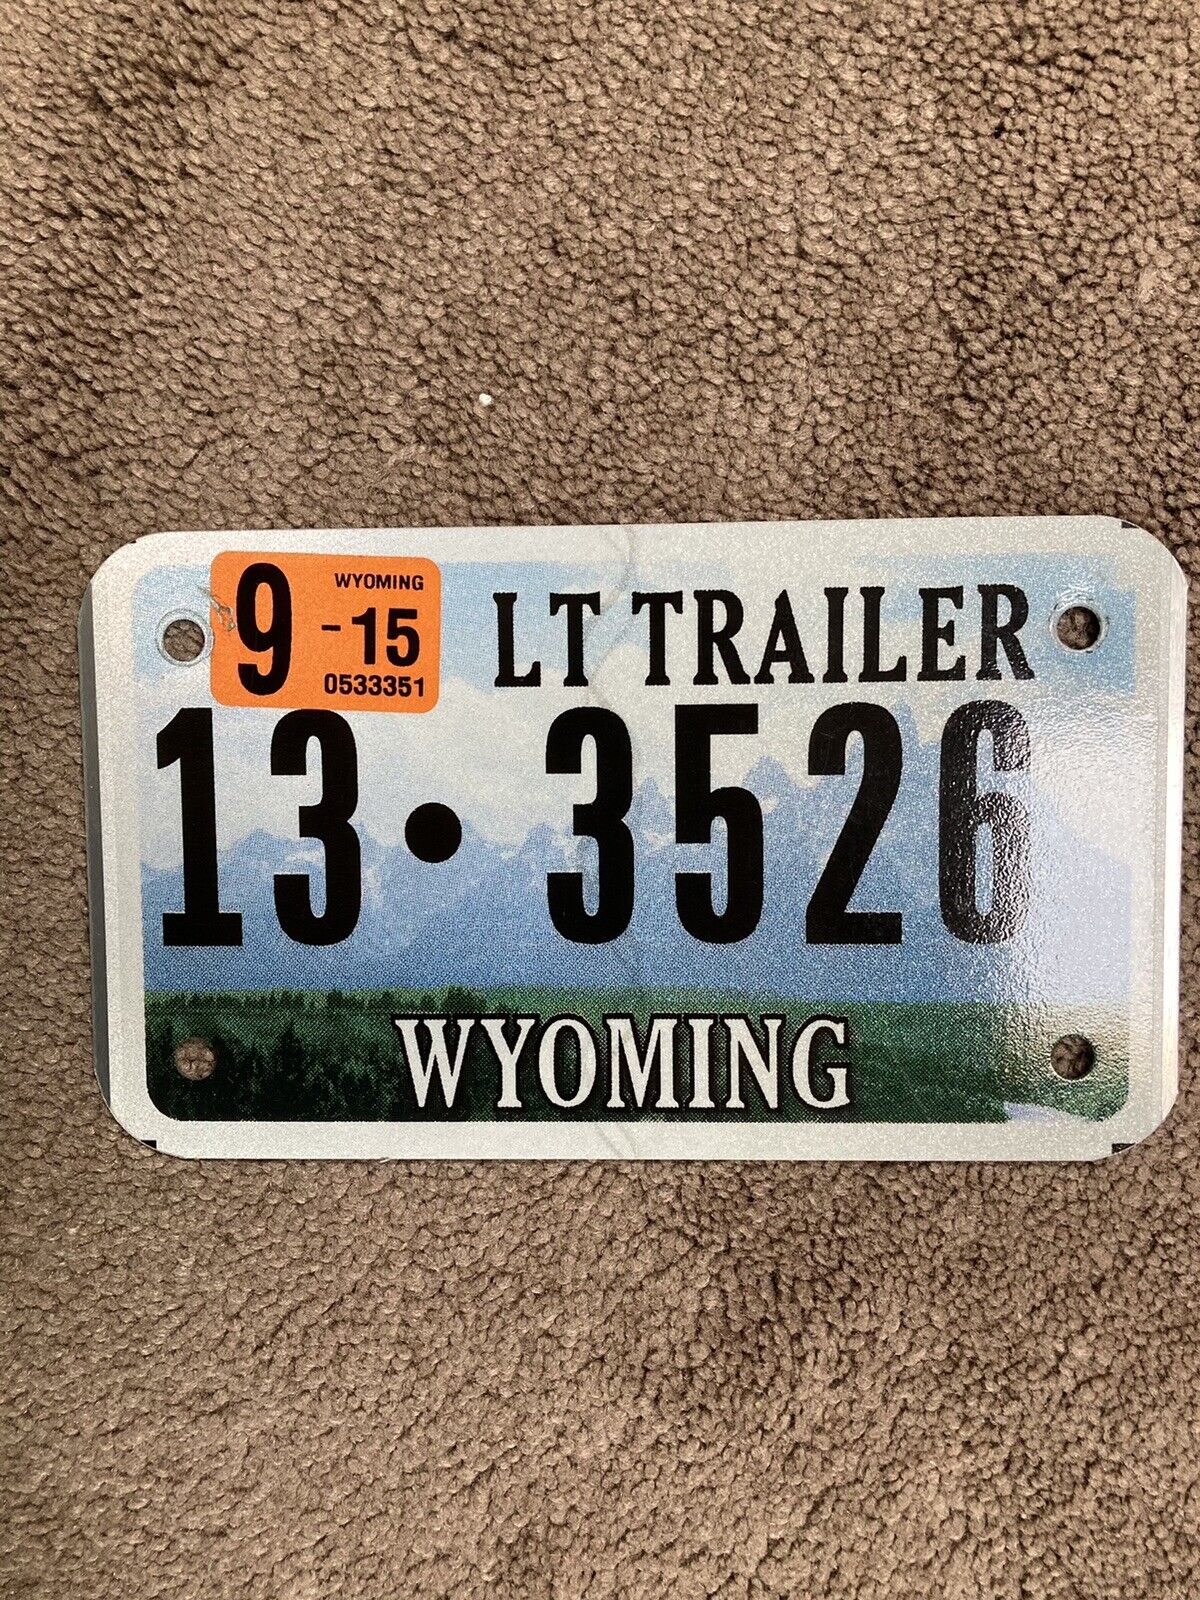 Original 2015 Wyoming Lt Trailer License Plate - Nice!